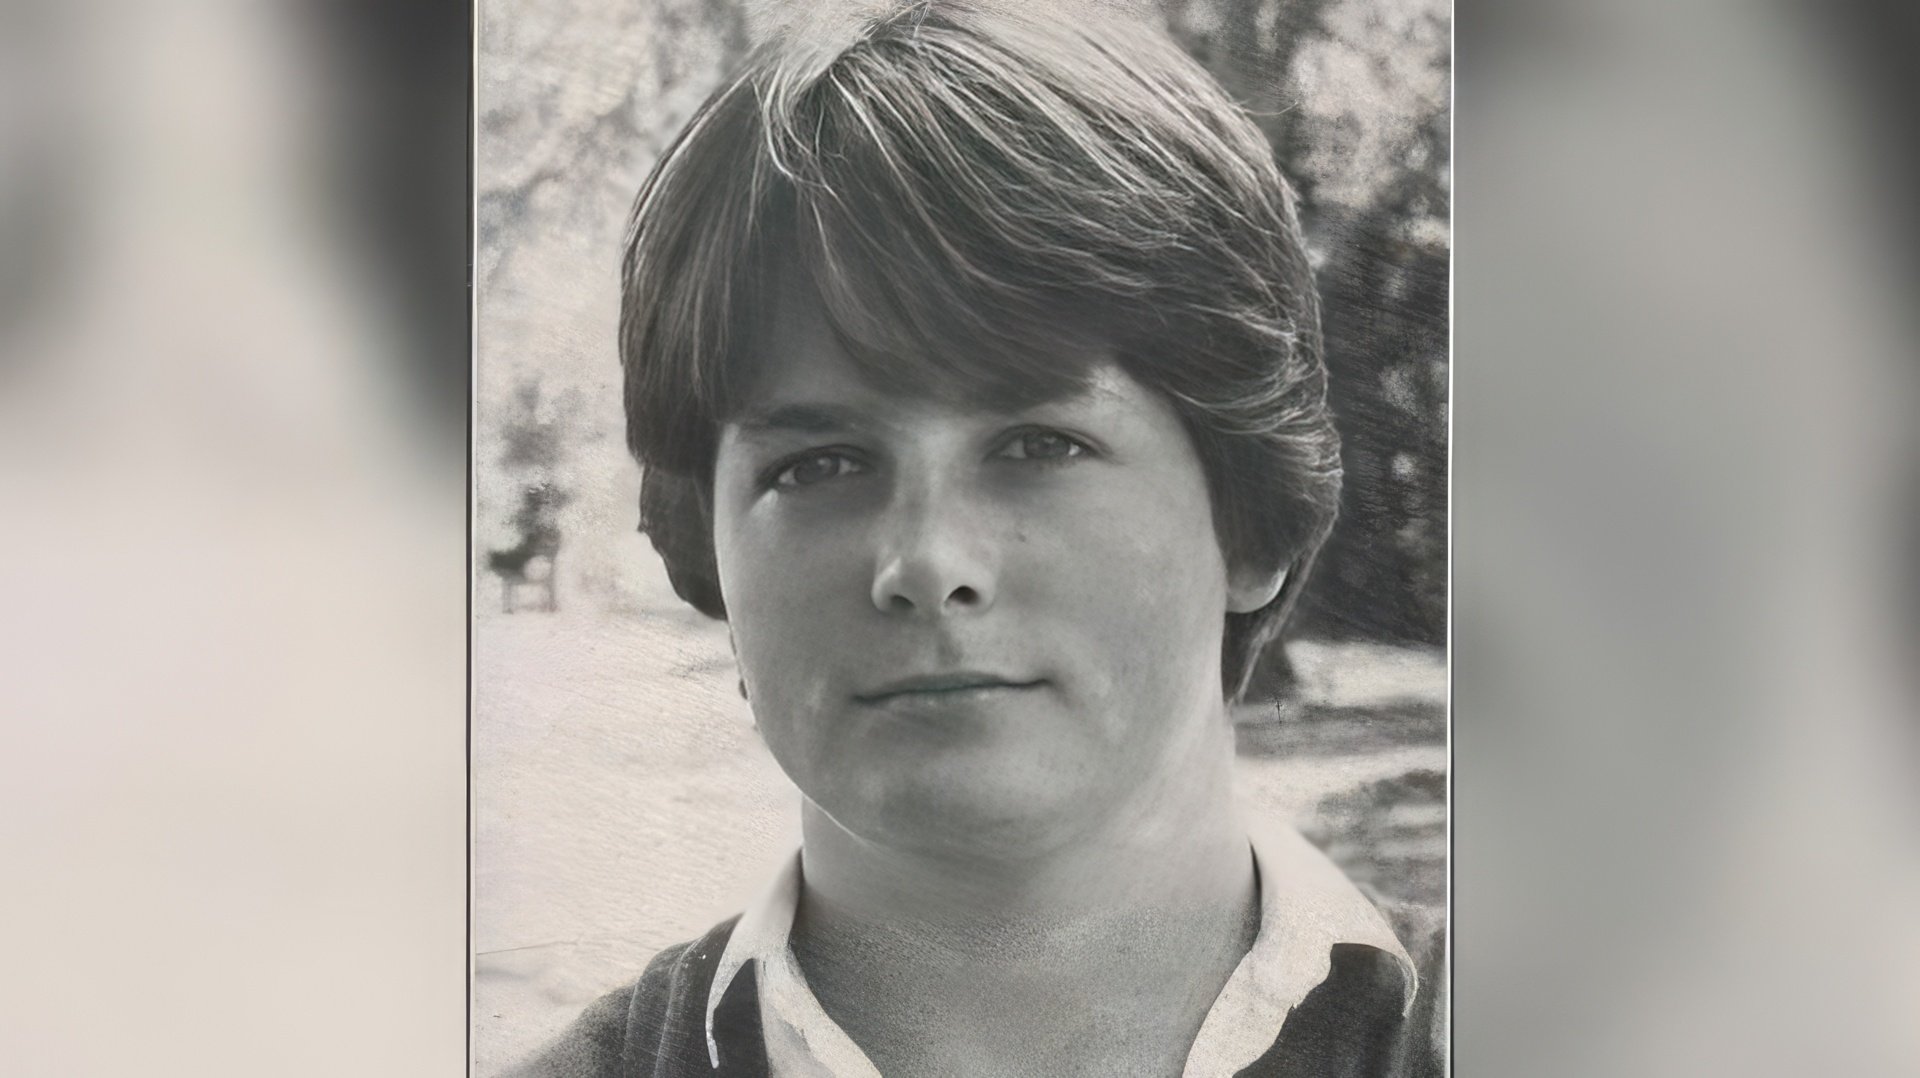 Young Michael J. Fox